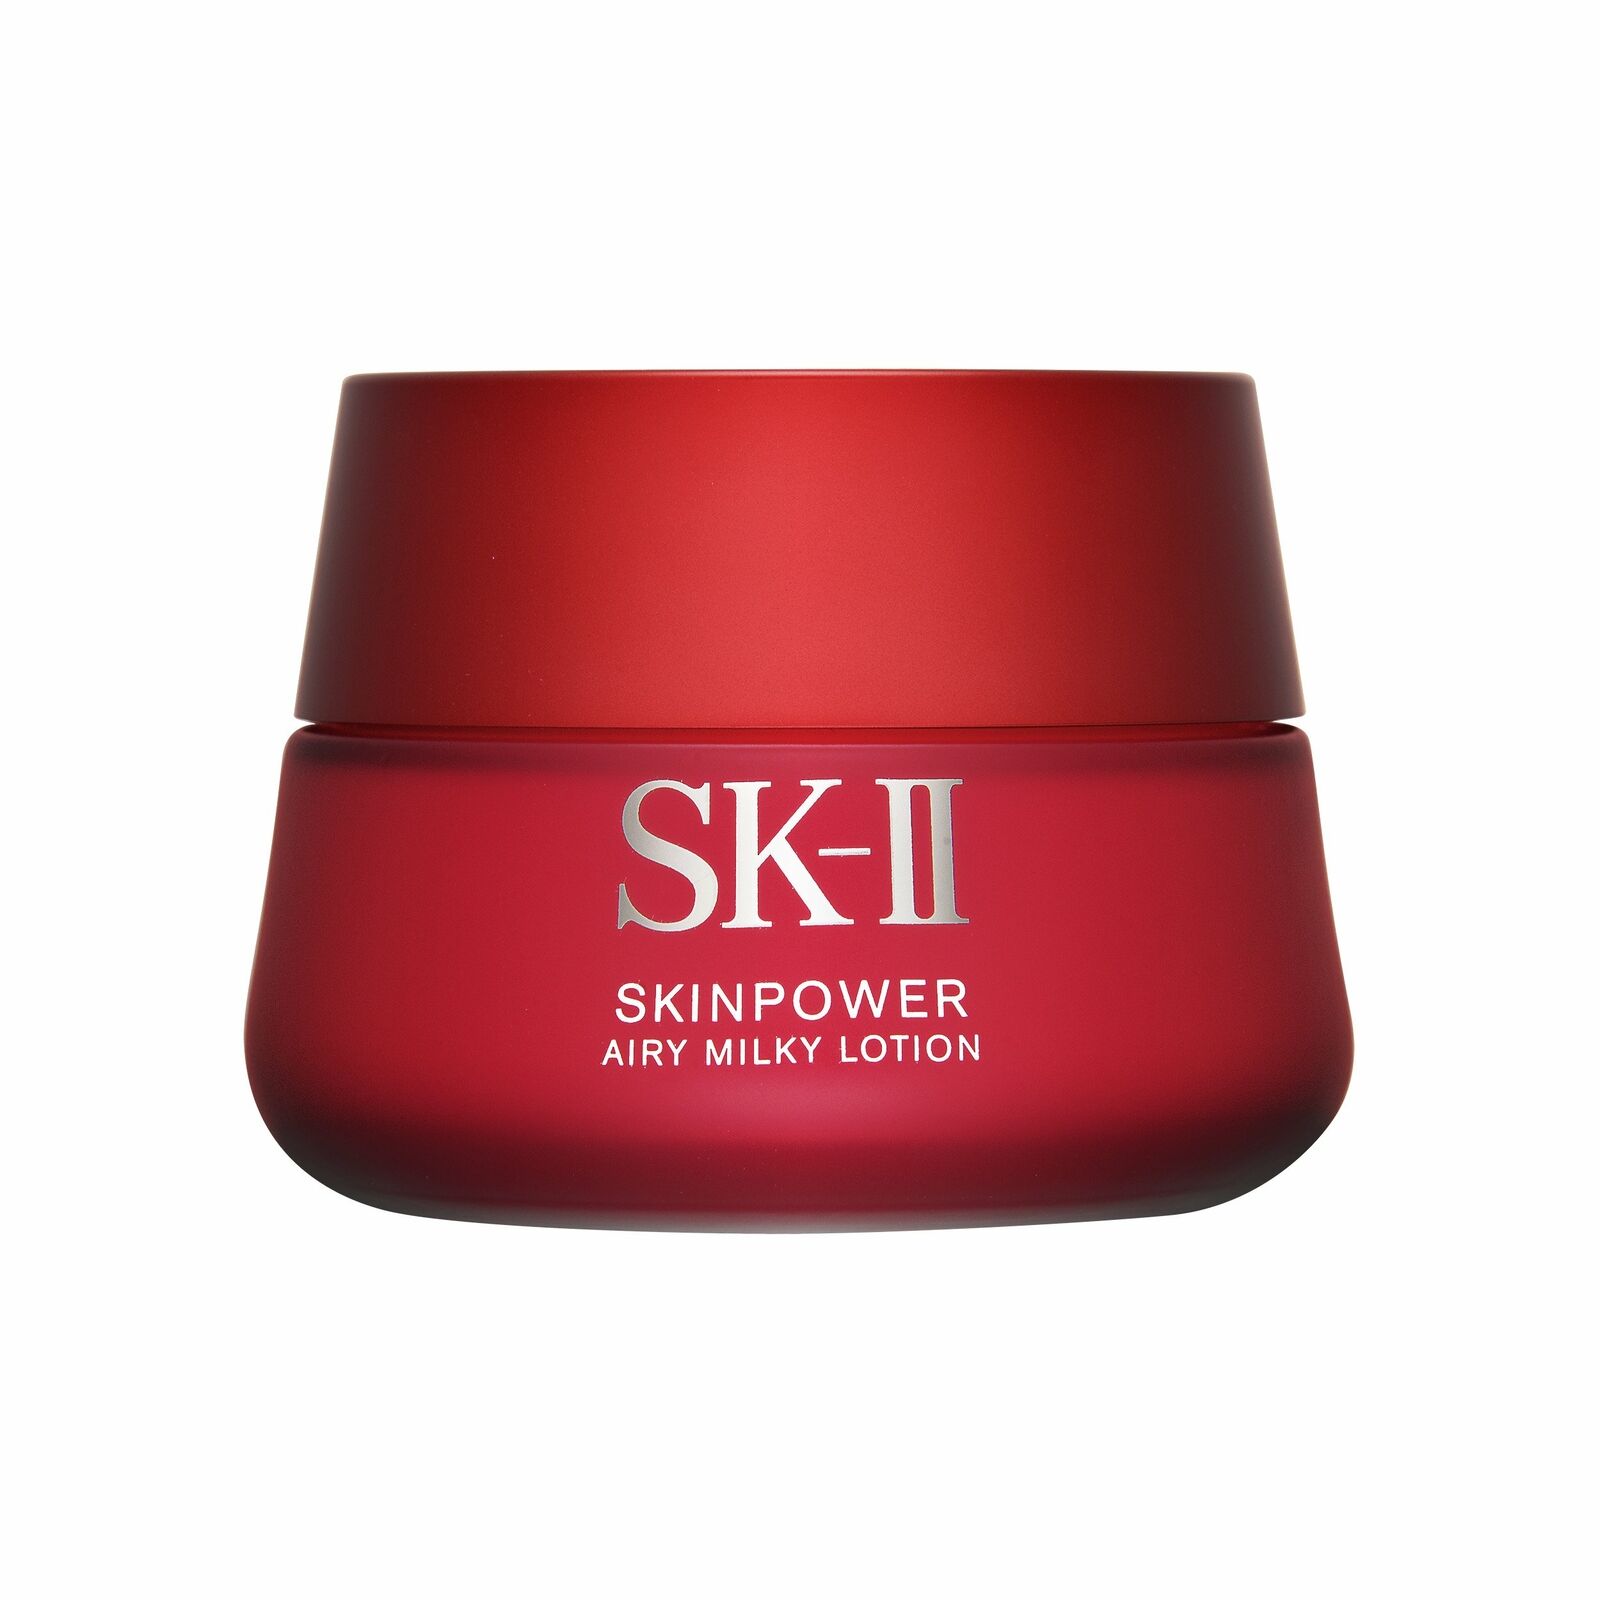 SK-II Skinpower Airy Milky Lotion 80g PITERA SKIN POWER ANTI-AGING NEW SKII SK2